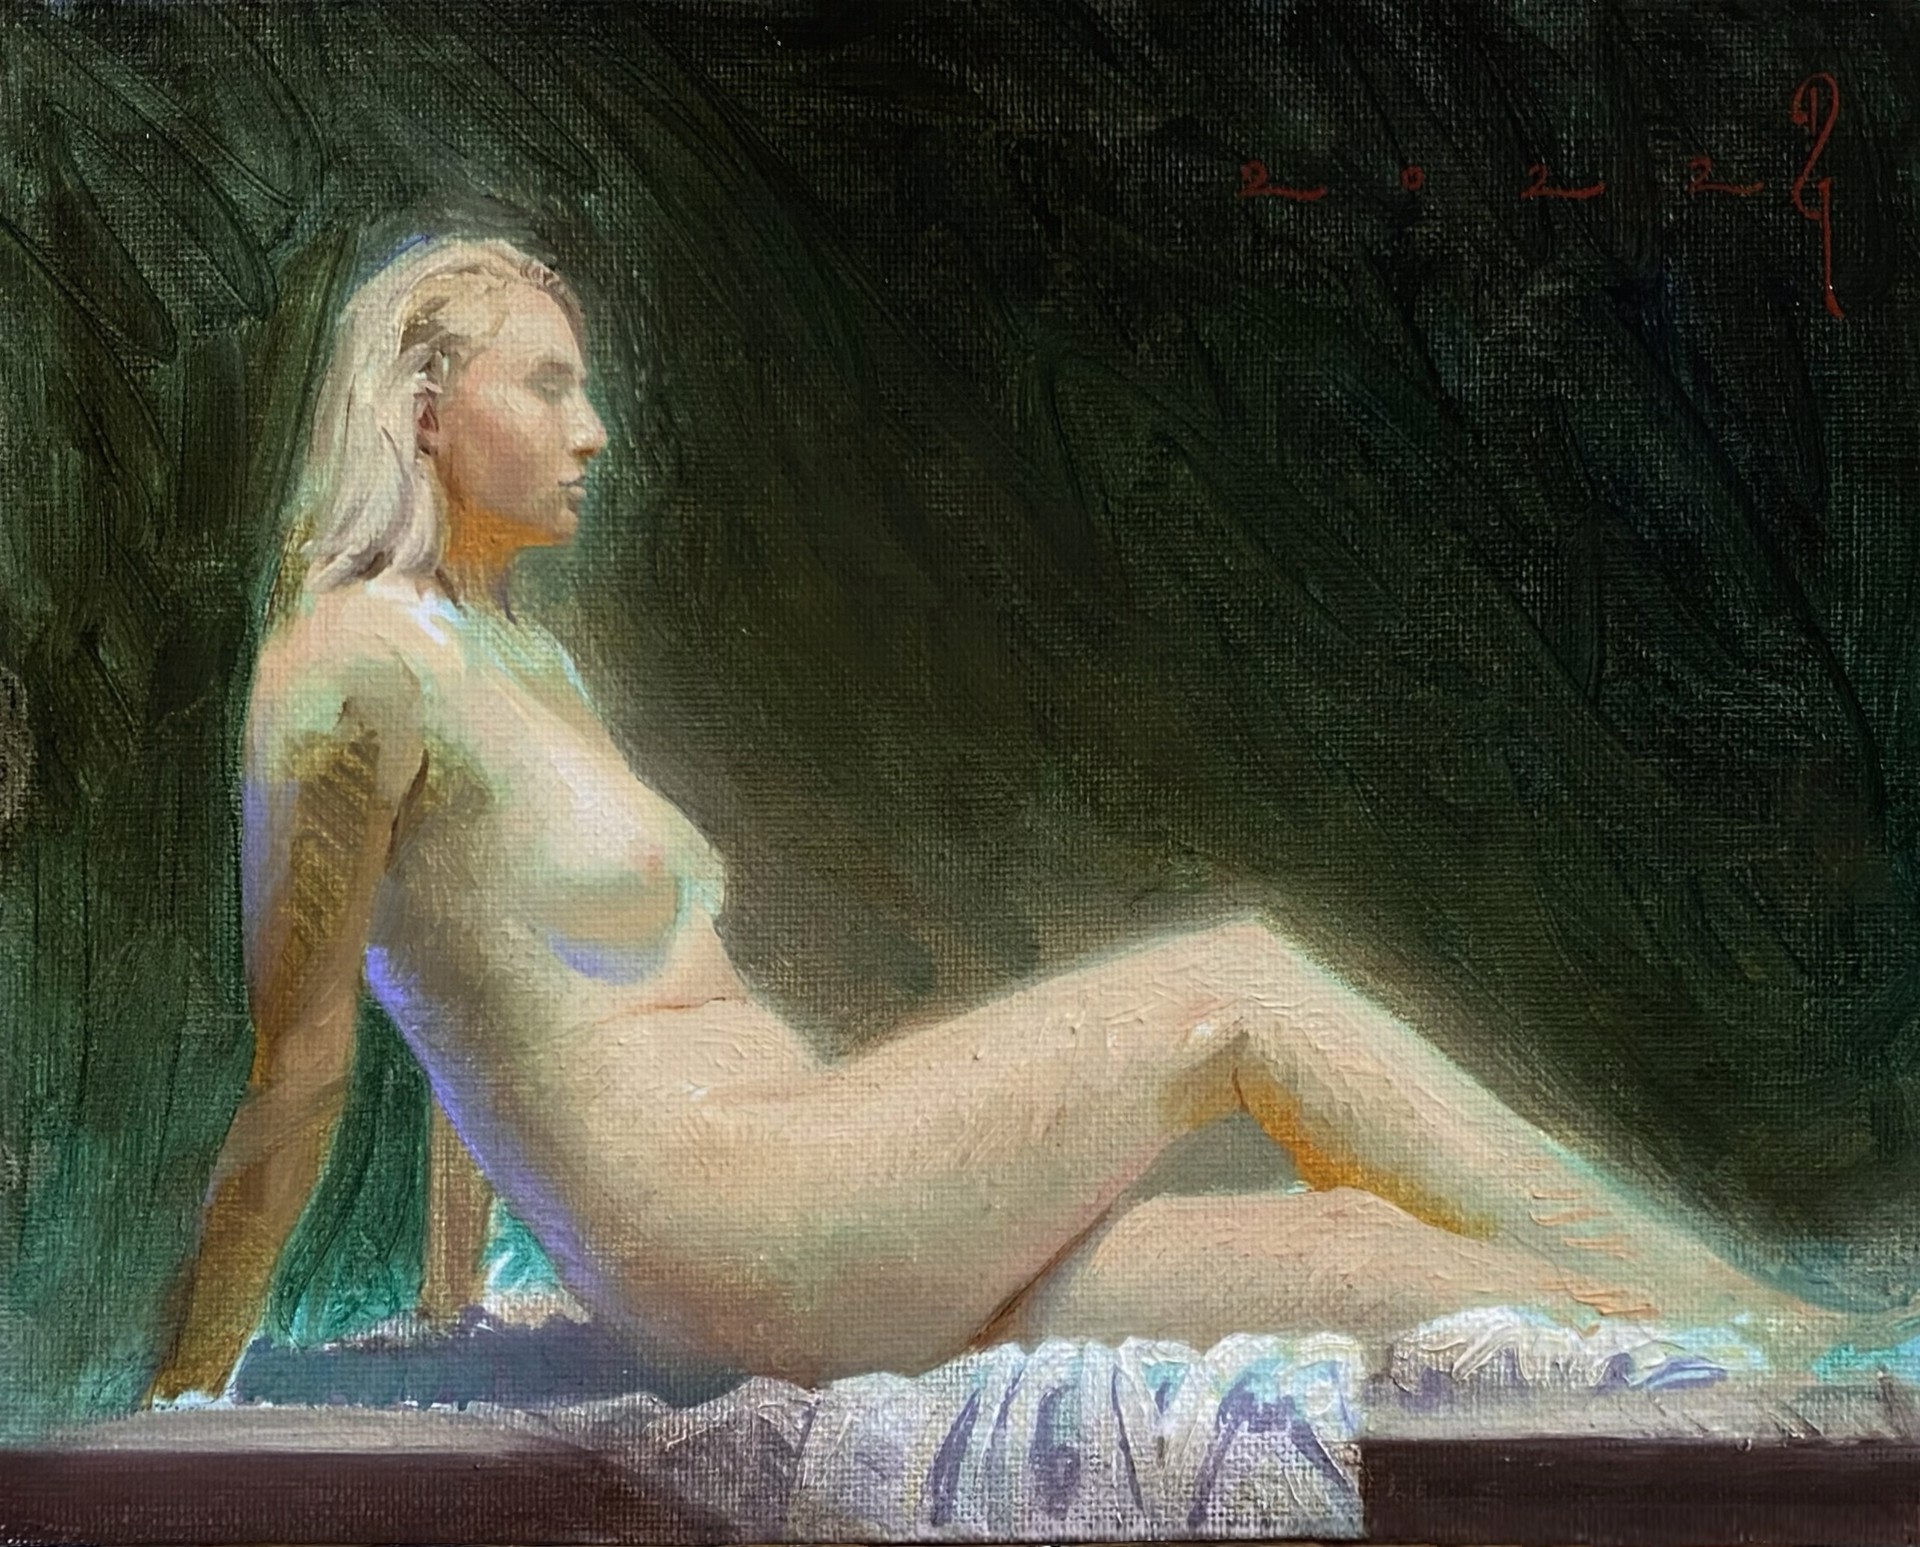 Reclining Nude in Green by Diego Glazer